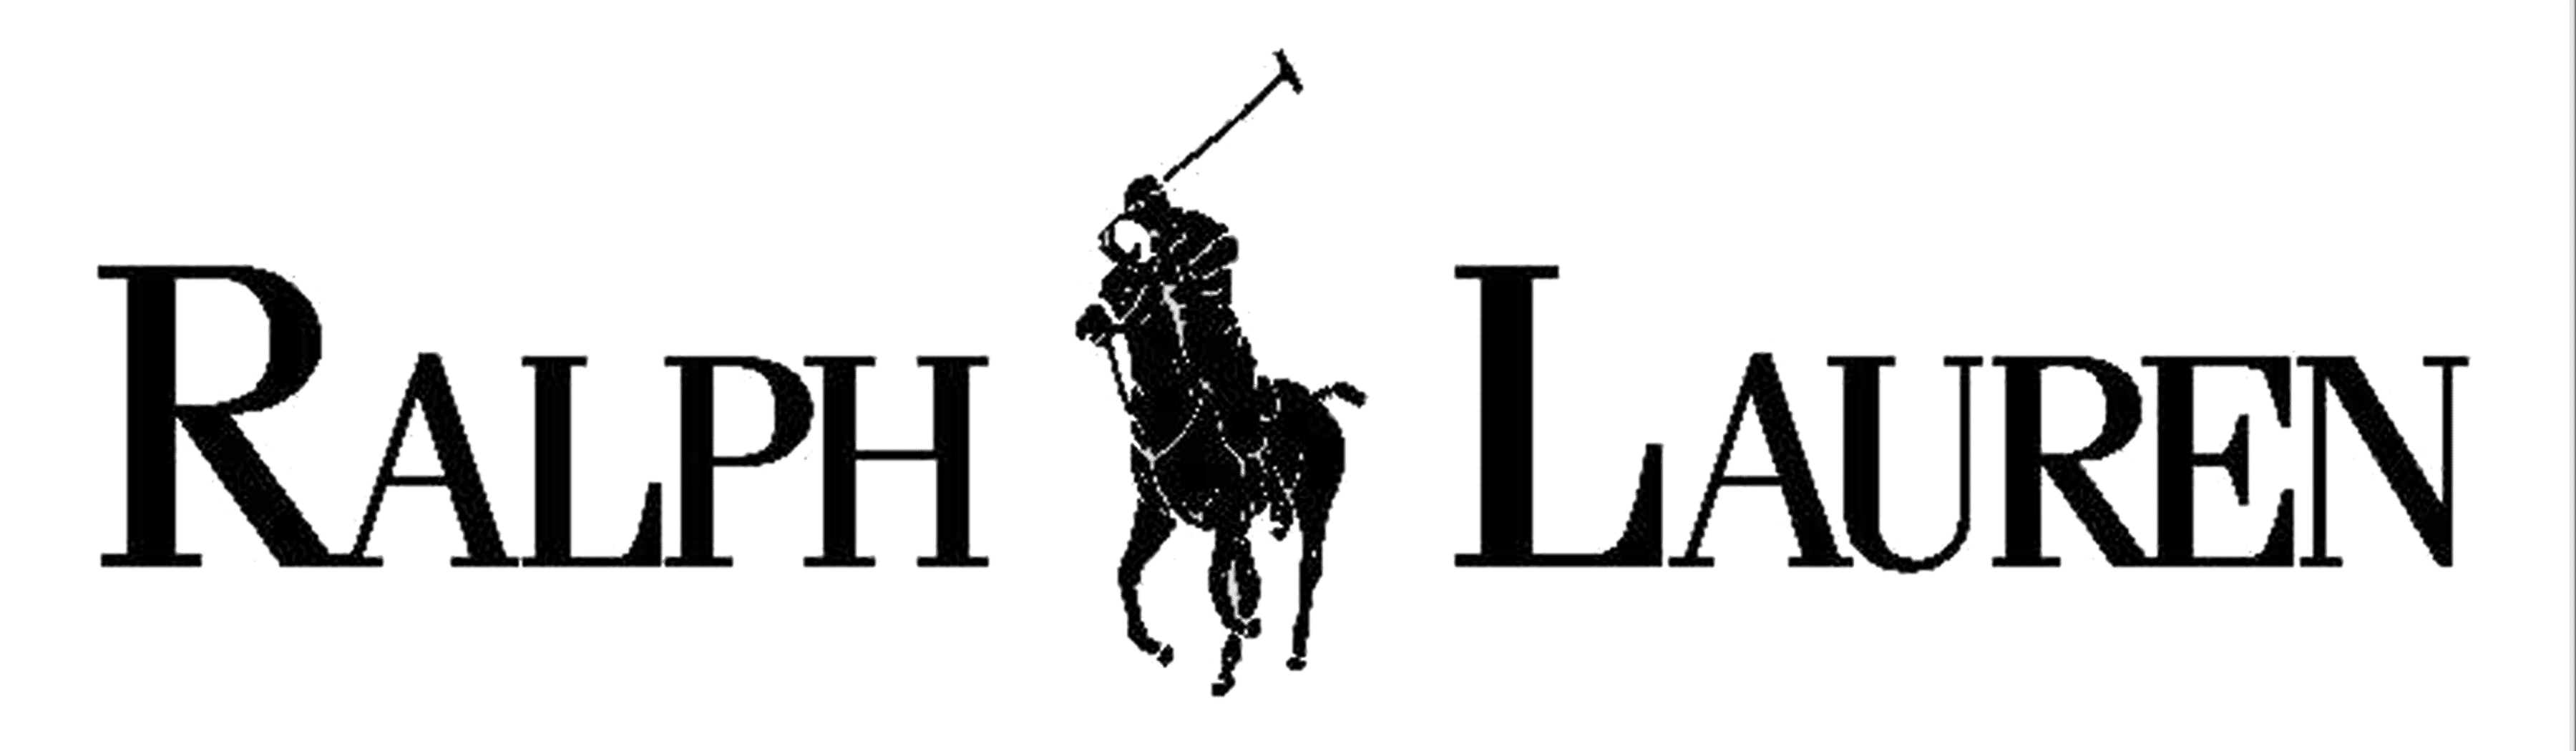 Ralph Lauren: Company Profile